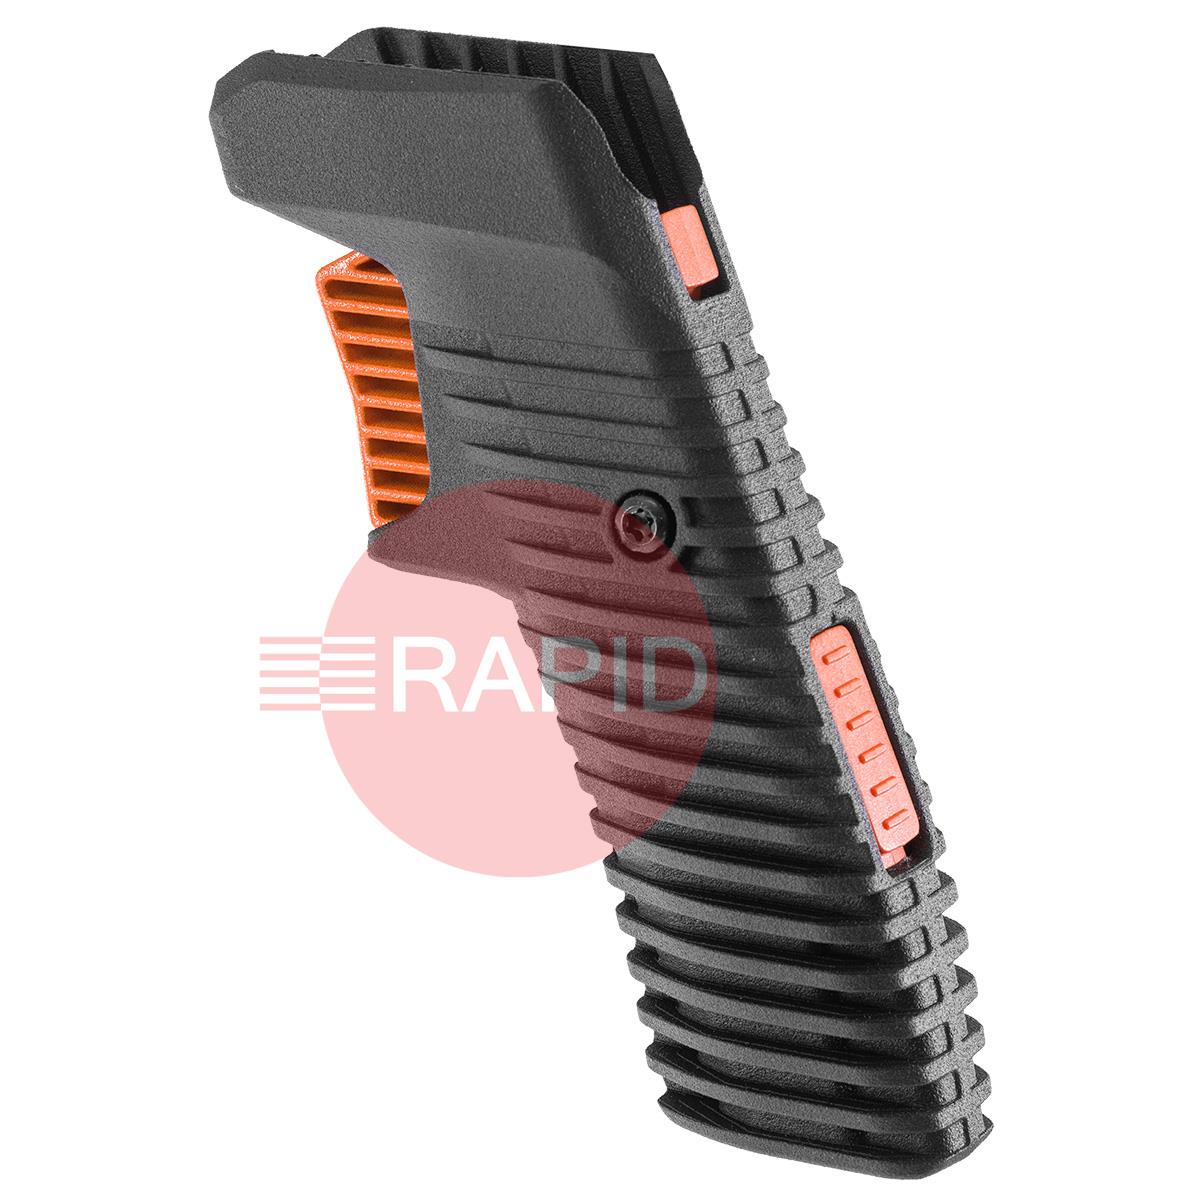 SP020542  Kemppi Flexlite Additional Pistol Grip Handle, for GC Range